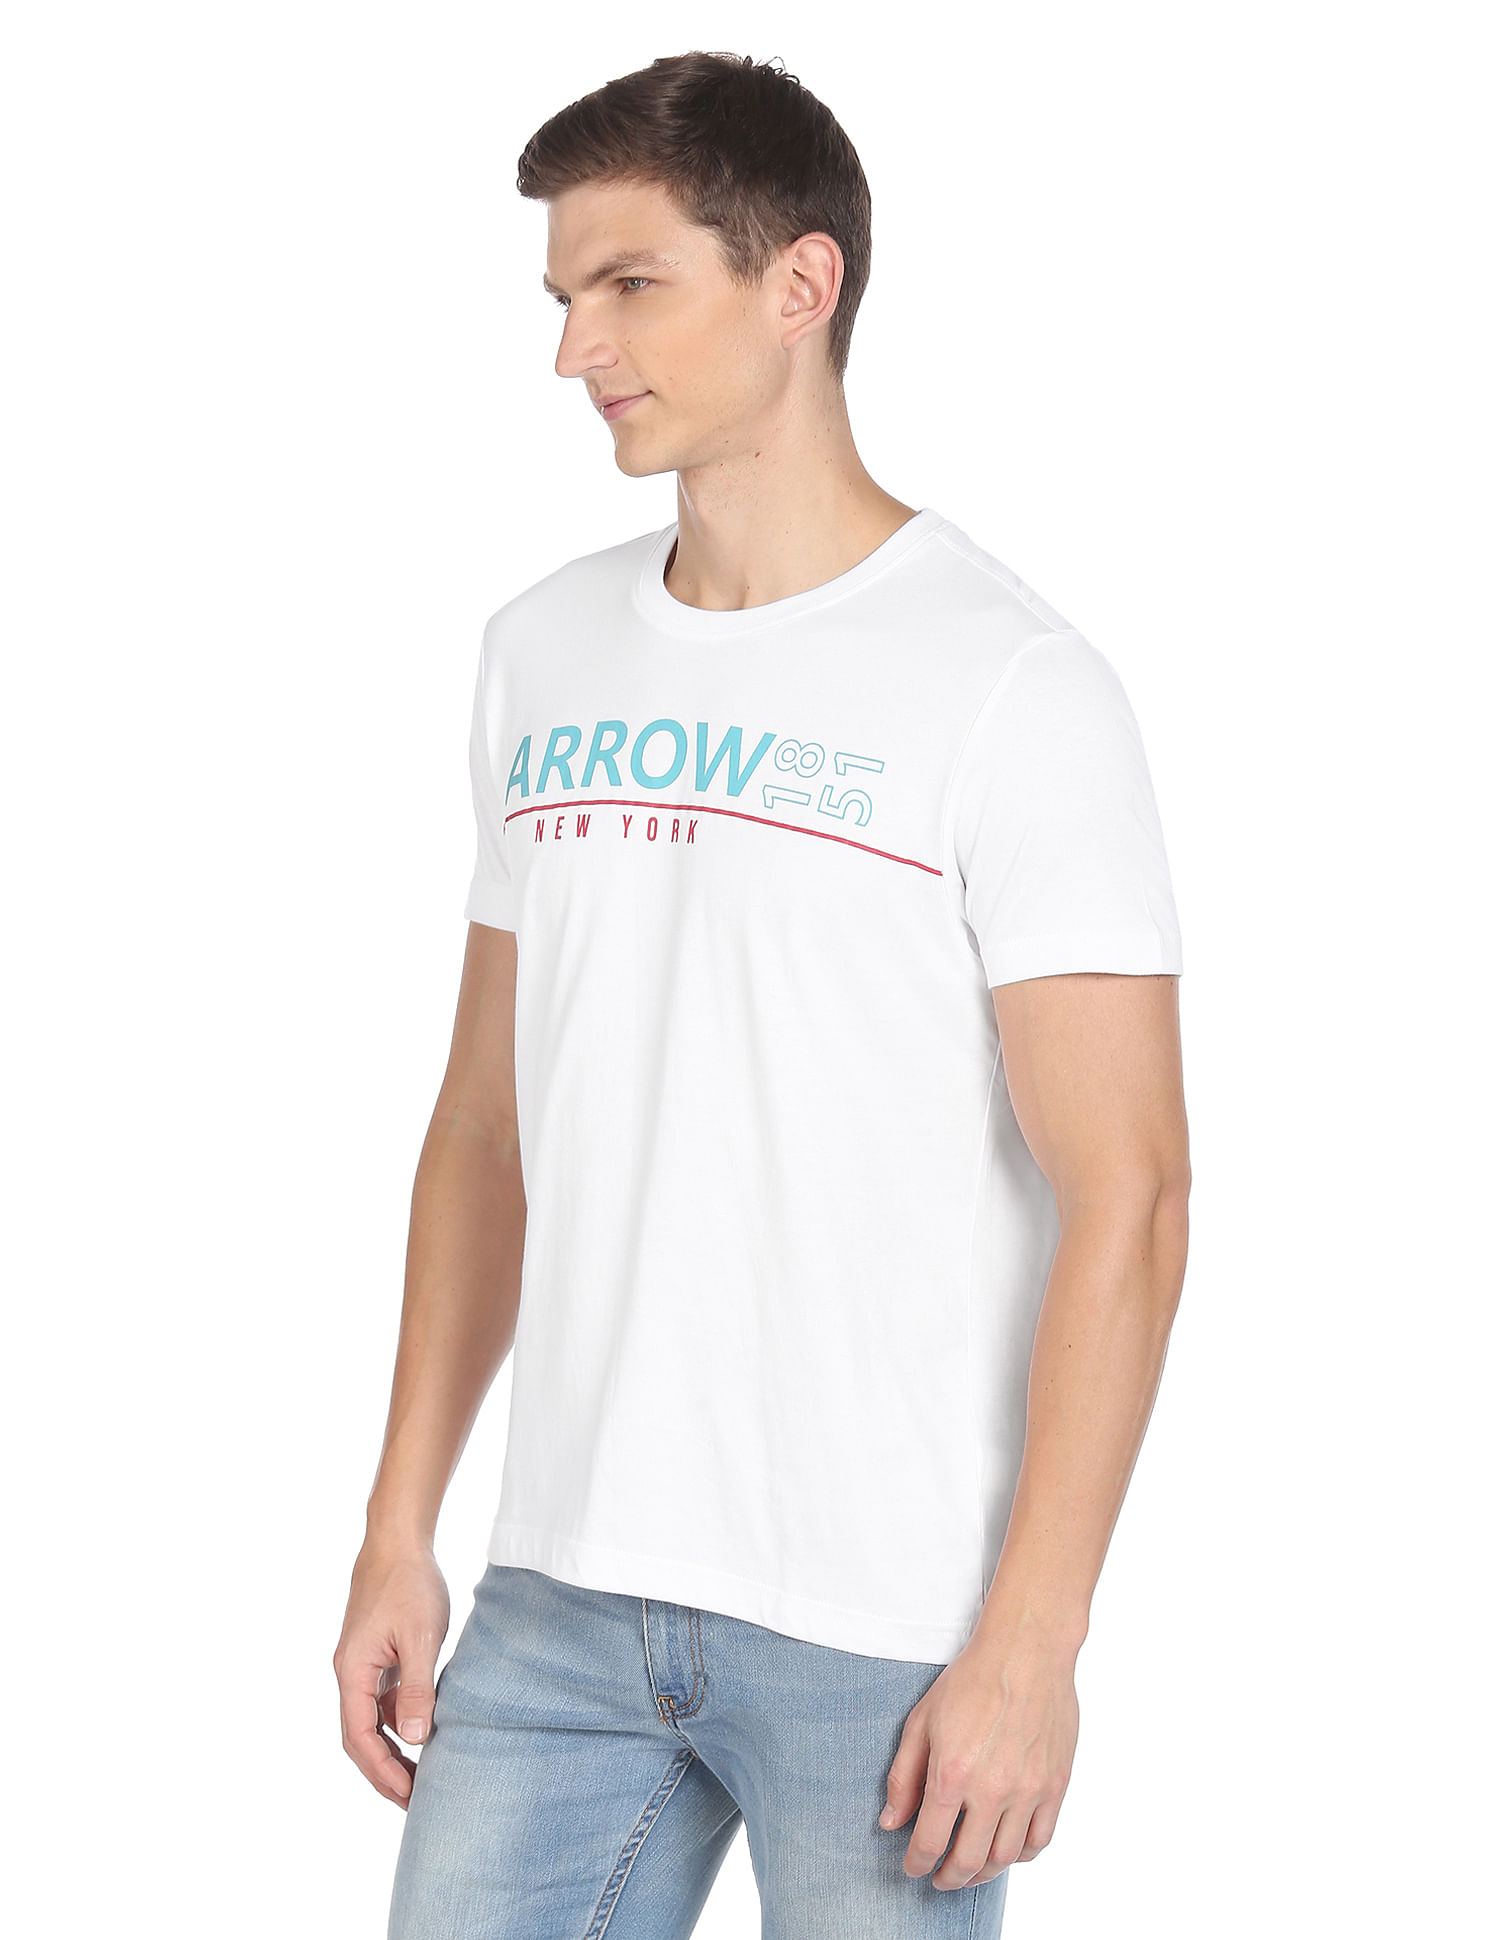 Men T-Shirt White Brand Buy Pure Cotton Print Sports Arrow